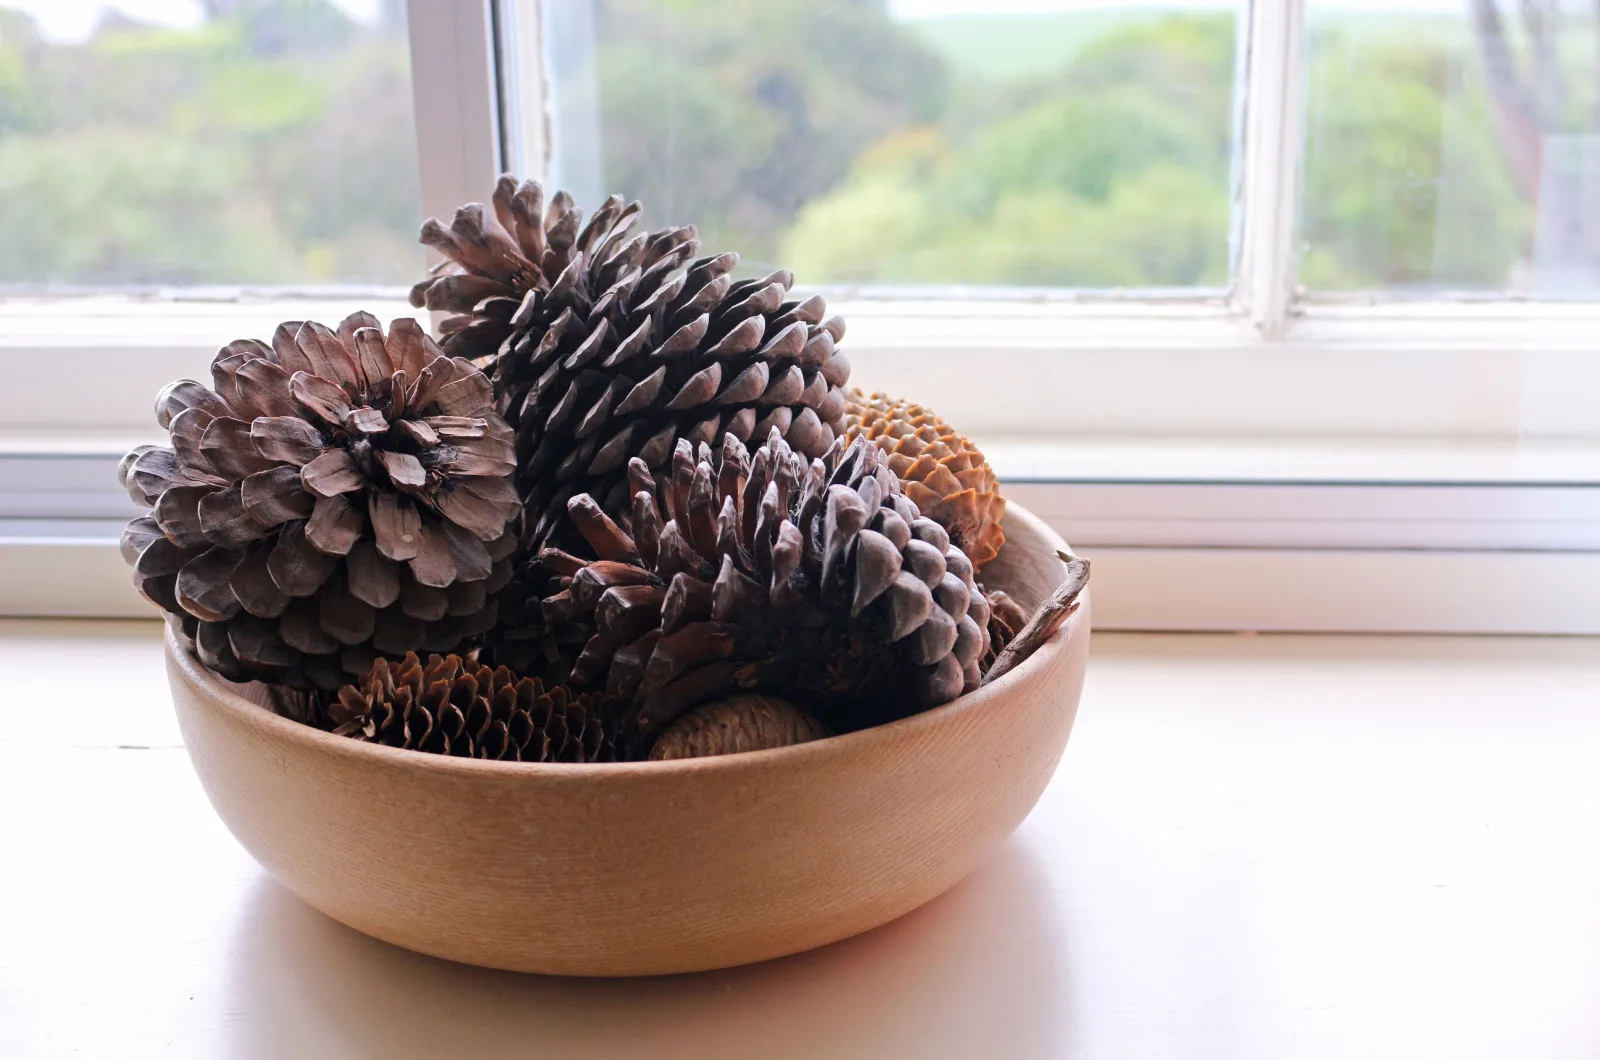 A Bowl full of Pine Cones